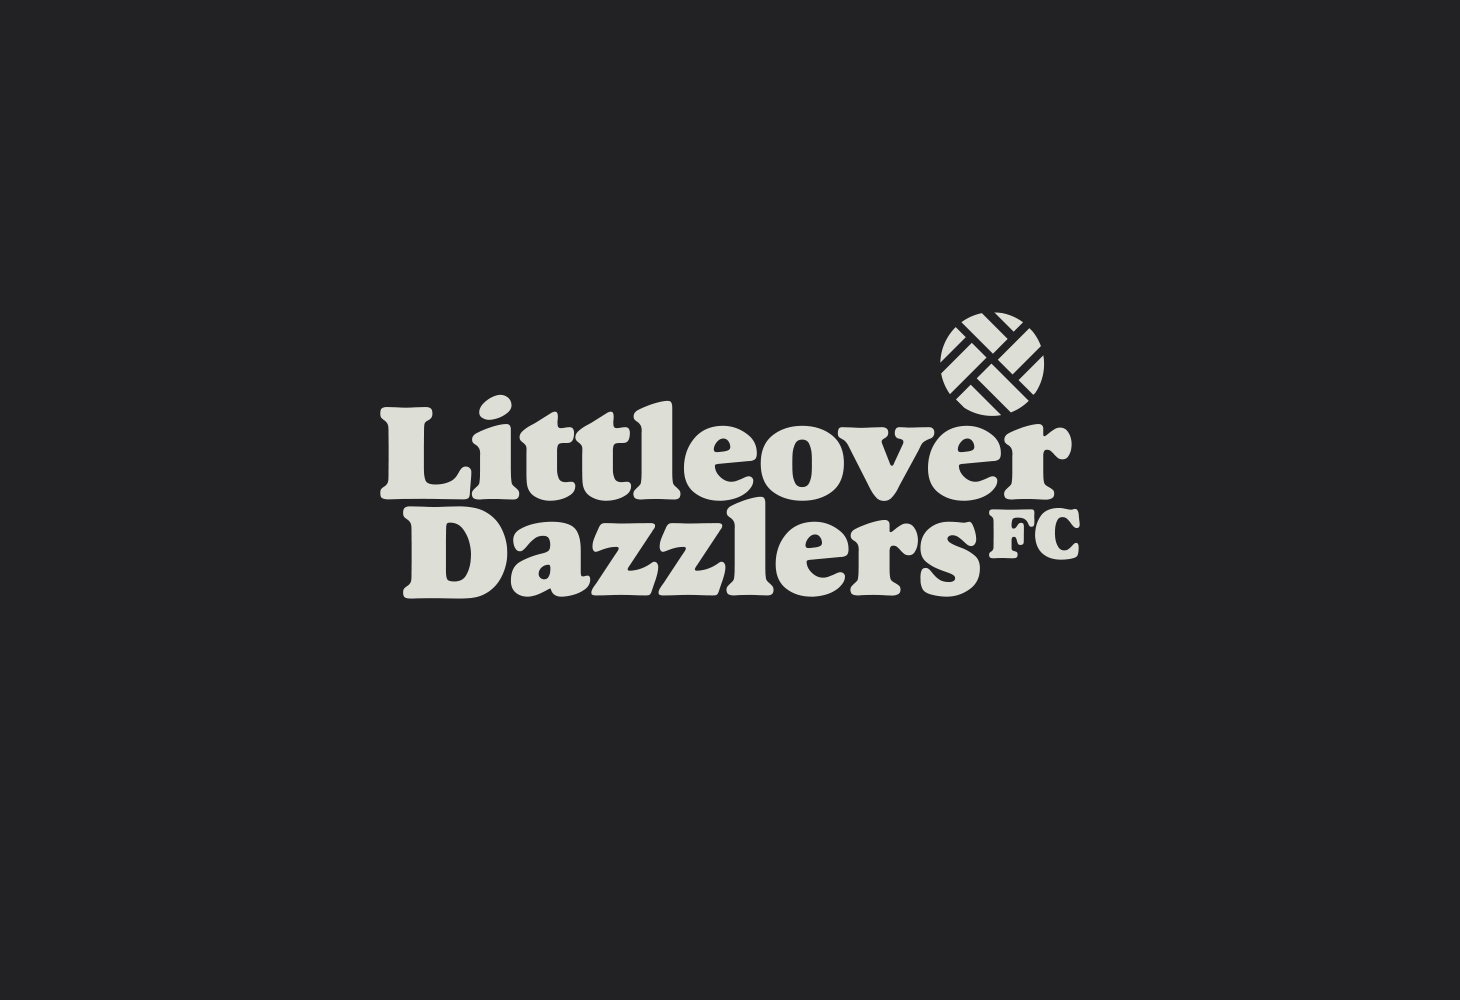 Littleover Dazzlers - Logotype - Logo